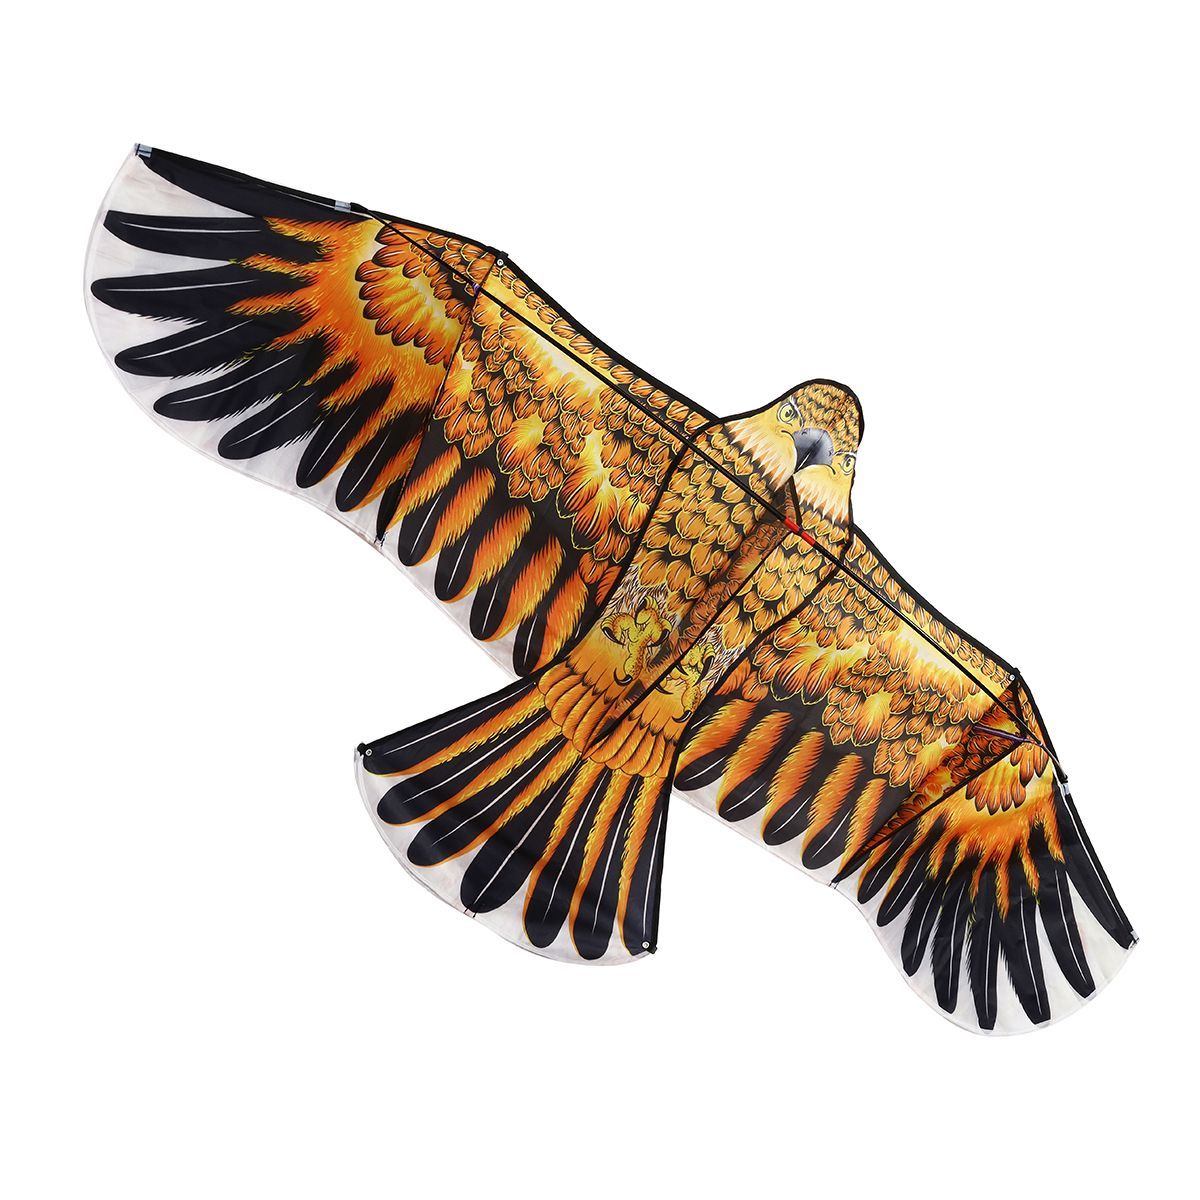 Flying-Hawk-Kite-Emulation-Bird-Scarer-Repellent-Home-Garden-Yard-Scarecrow-Tool-Decorations-1534492